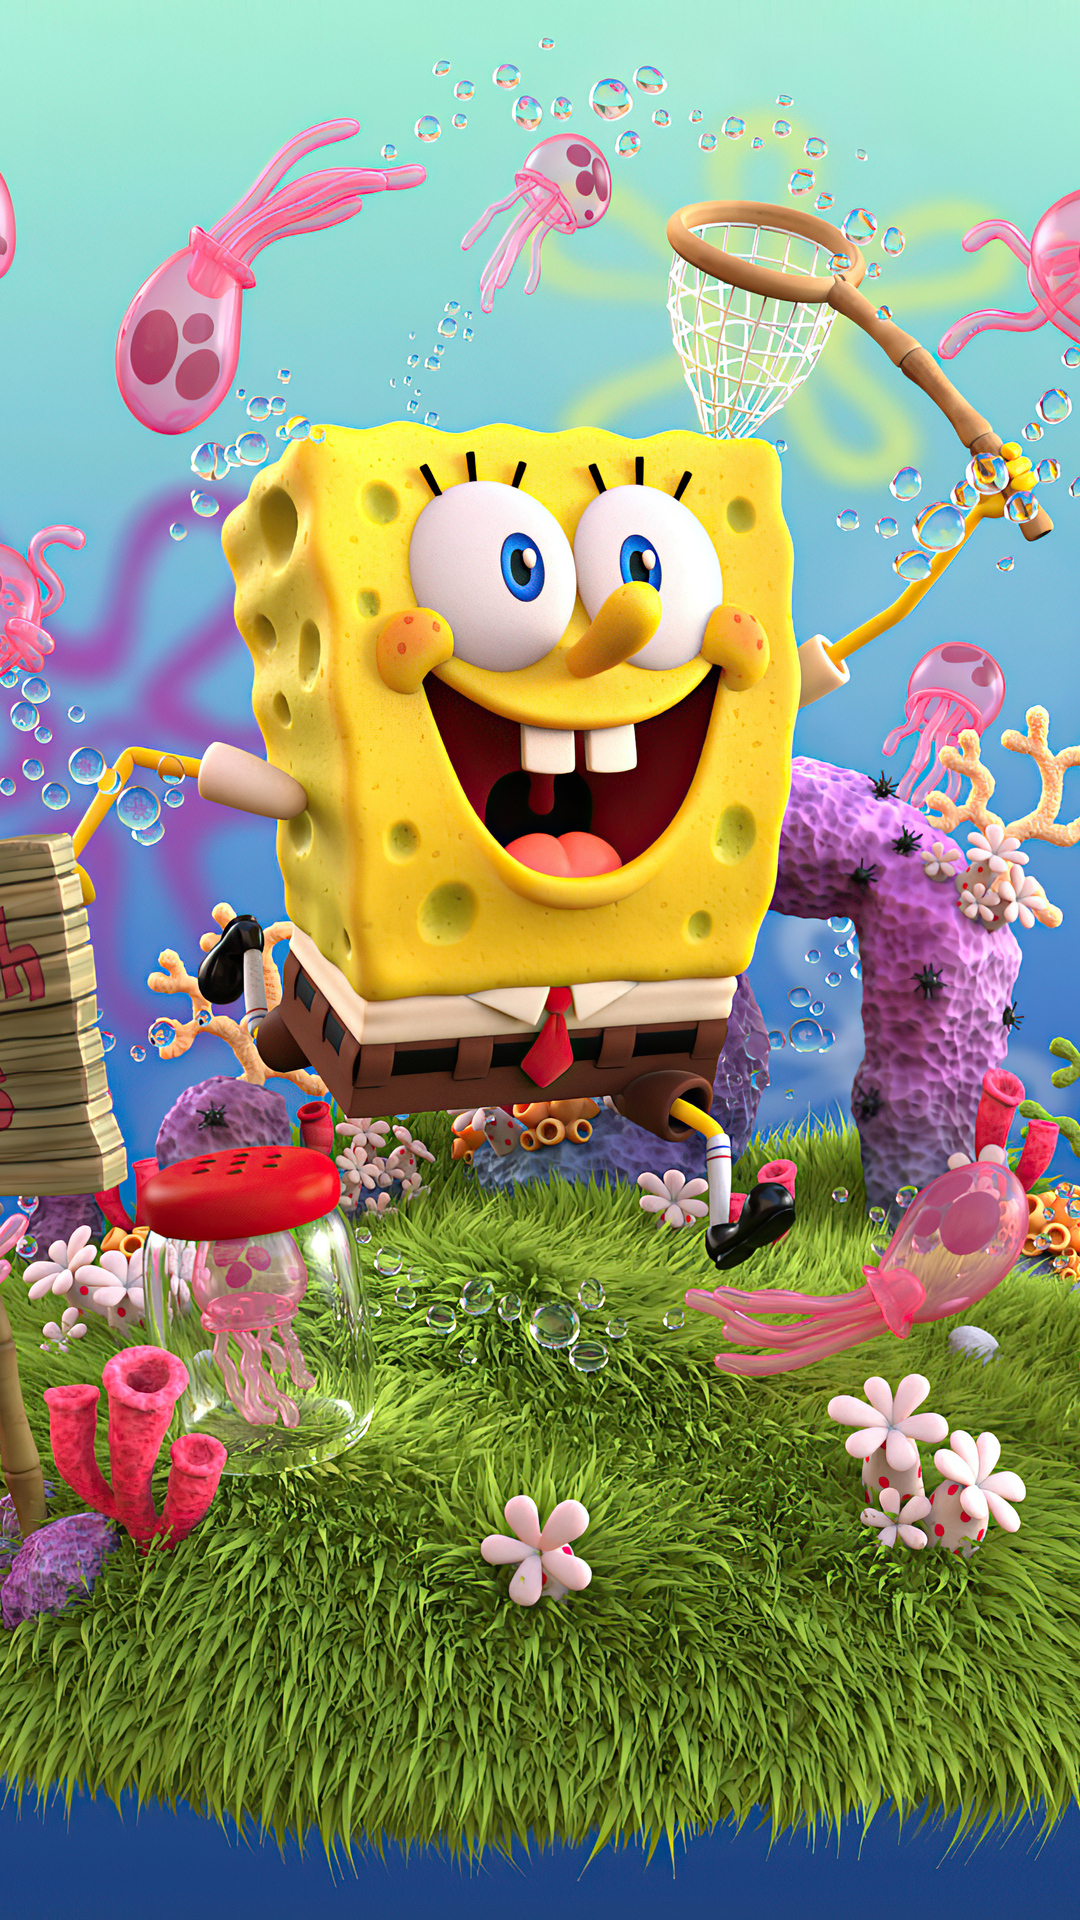 1080x1920 SpongeBob SquarePants 4k 2020 Iphone 7,6s,6 Plus, Pixel xl ,One Plus 3,3t,5 HD 4k Wallpapers, Images, Backgrounds, Photos and Pictures